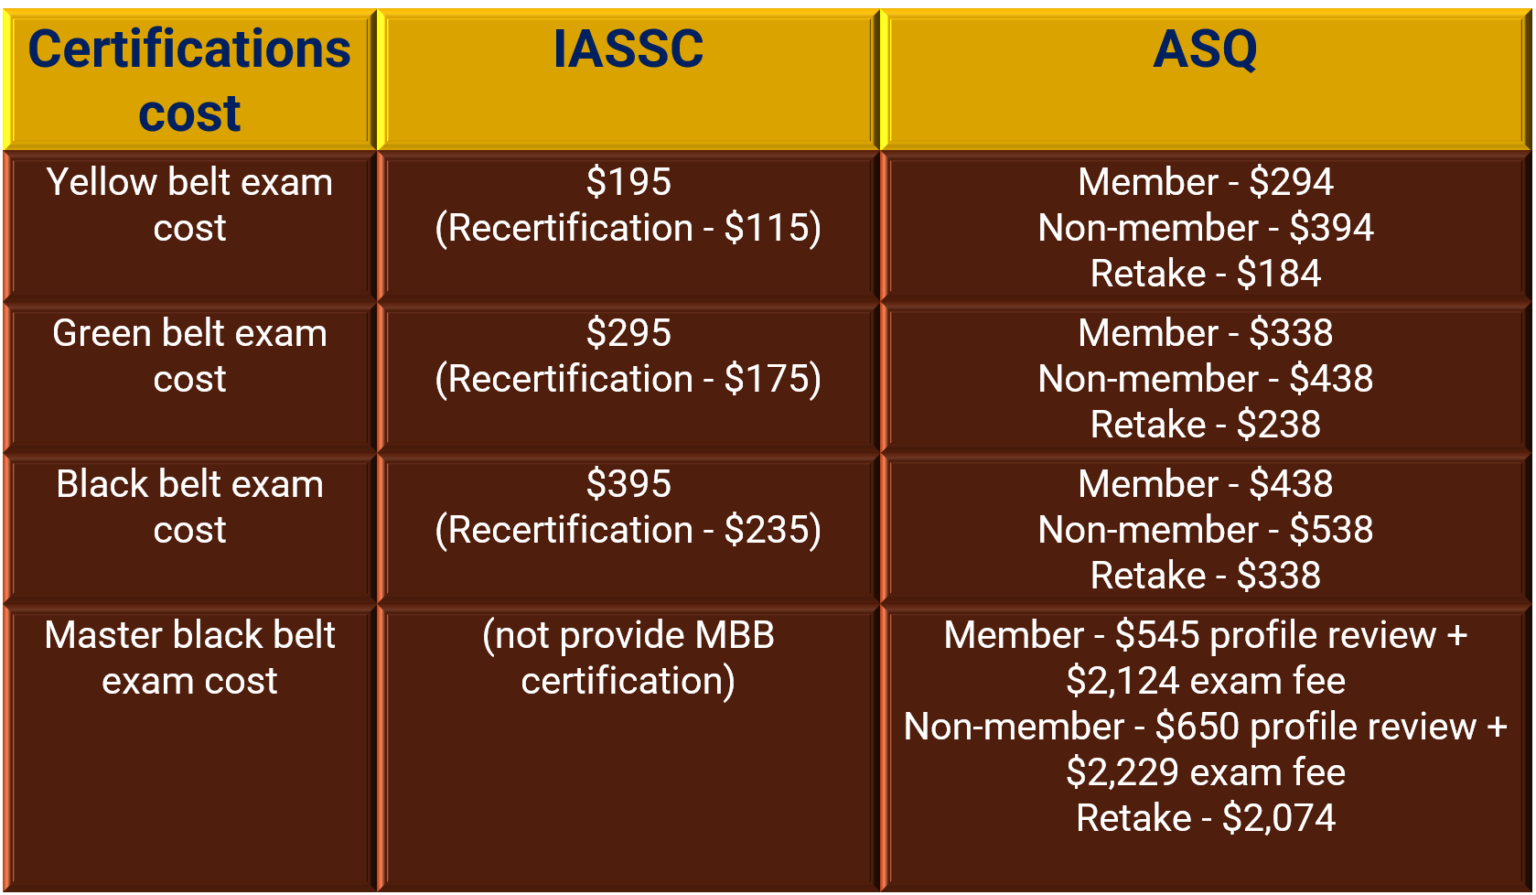 IASSC Vs ASQ: how to choose best Six Sigma certification?